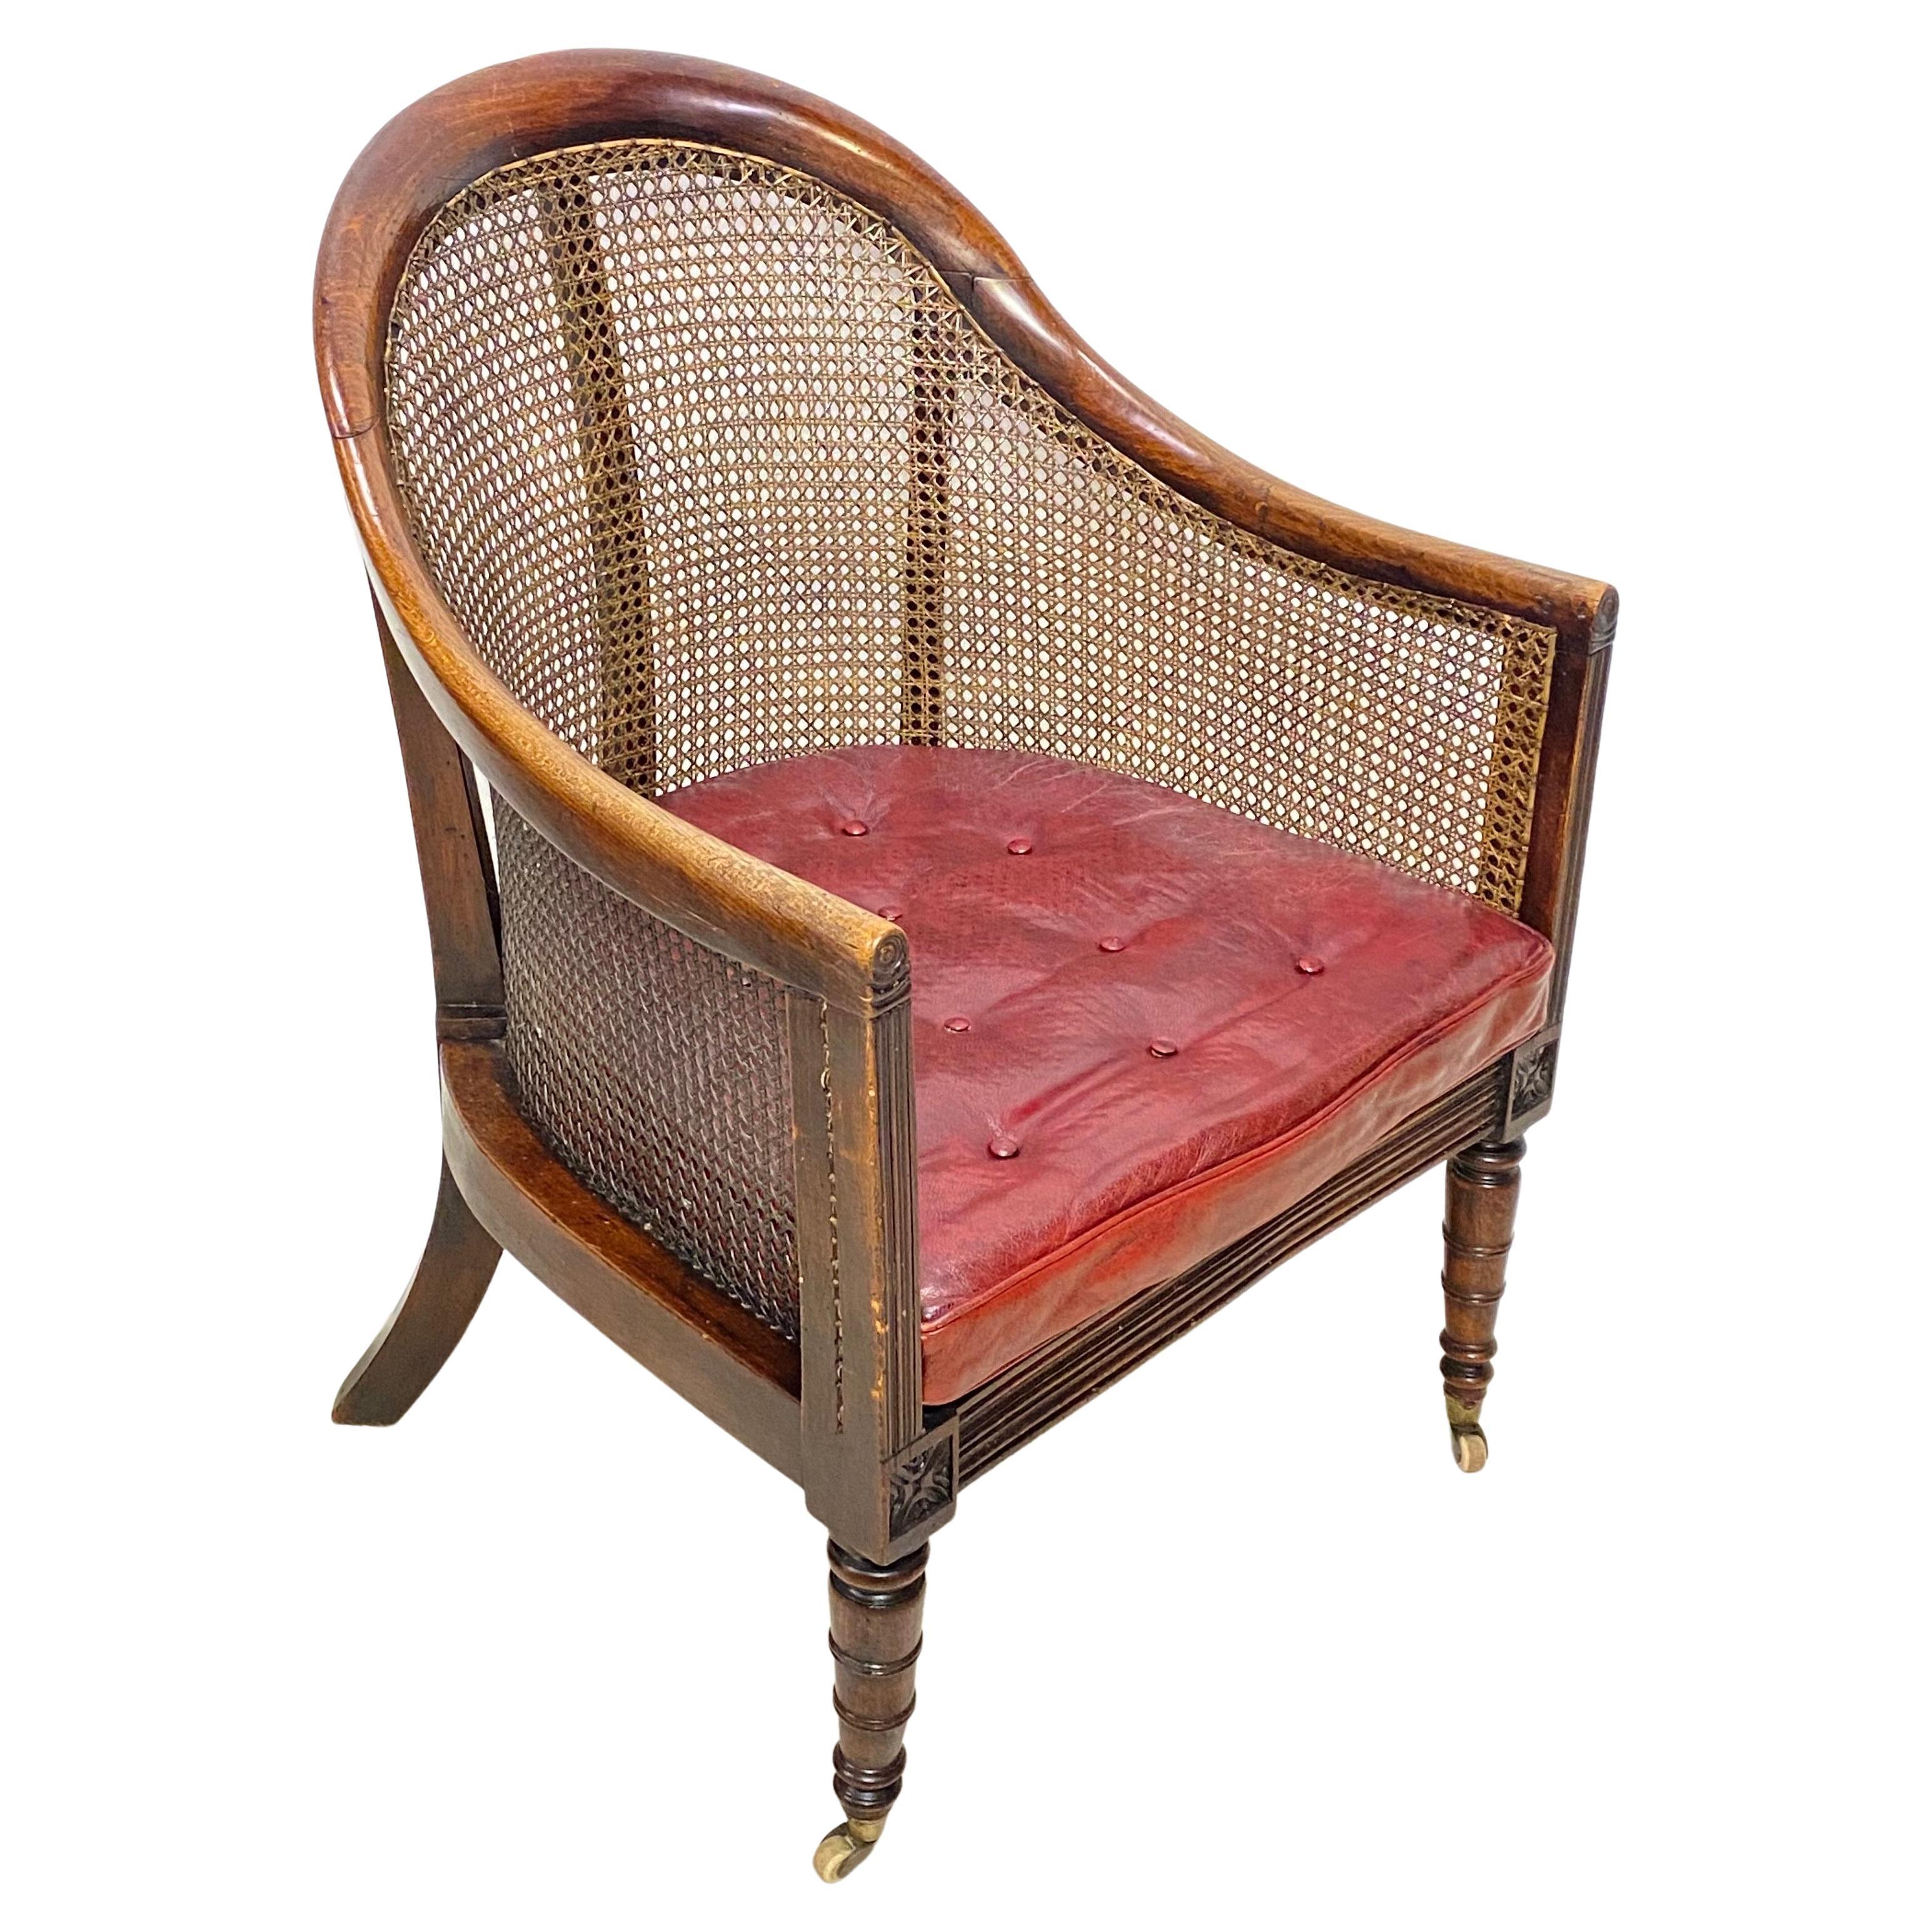 George III Mahogany Library Chair, English, Early 19th Century